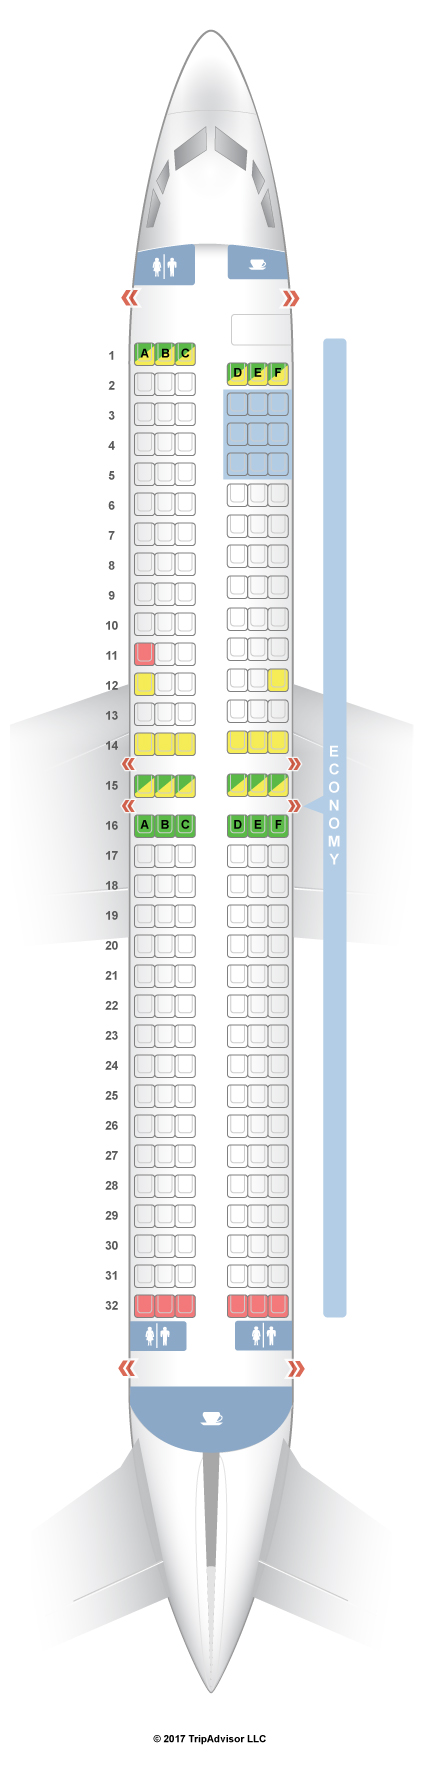 American 737 Seating Chart